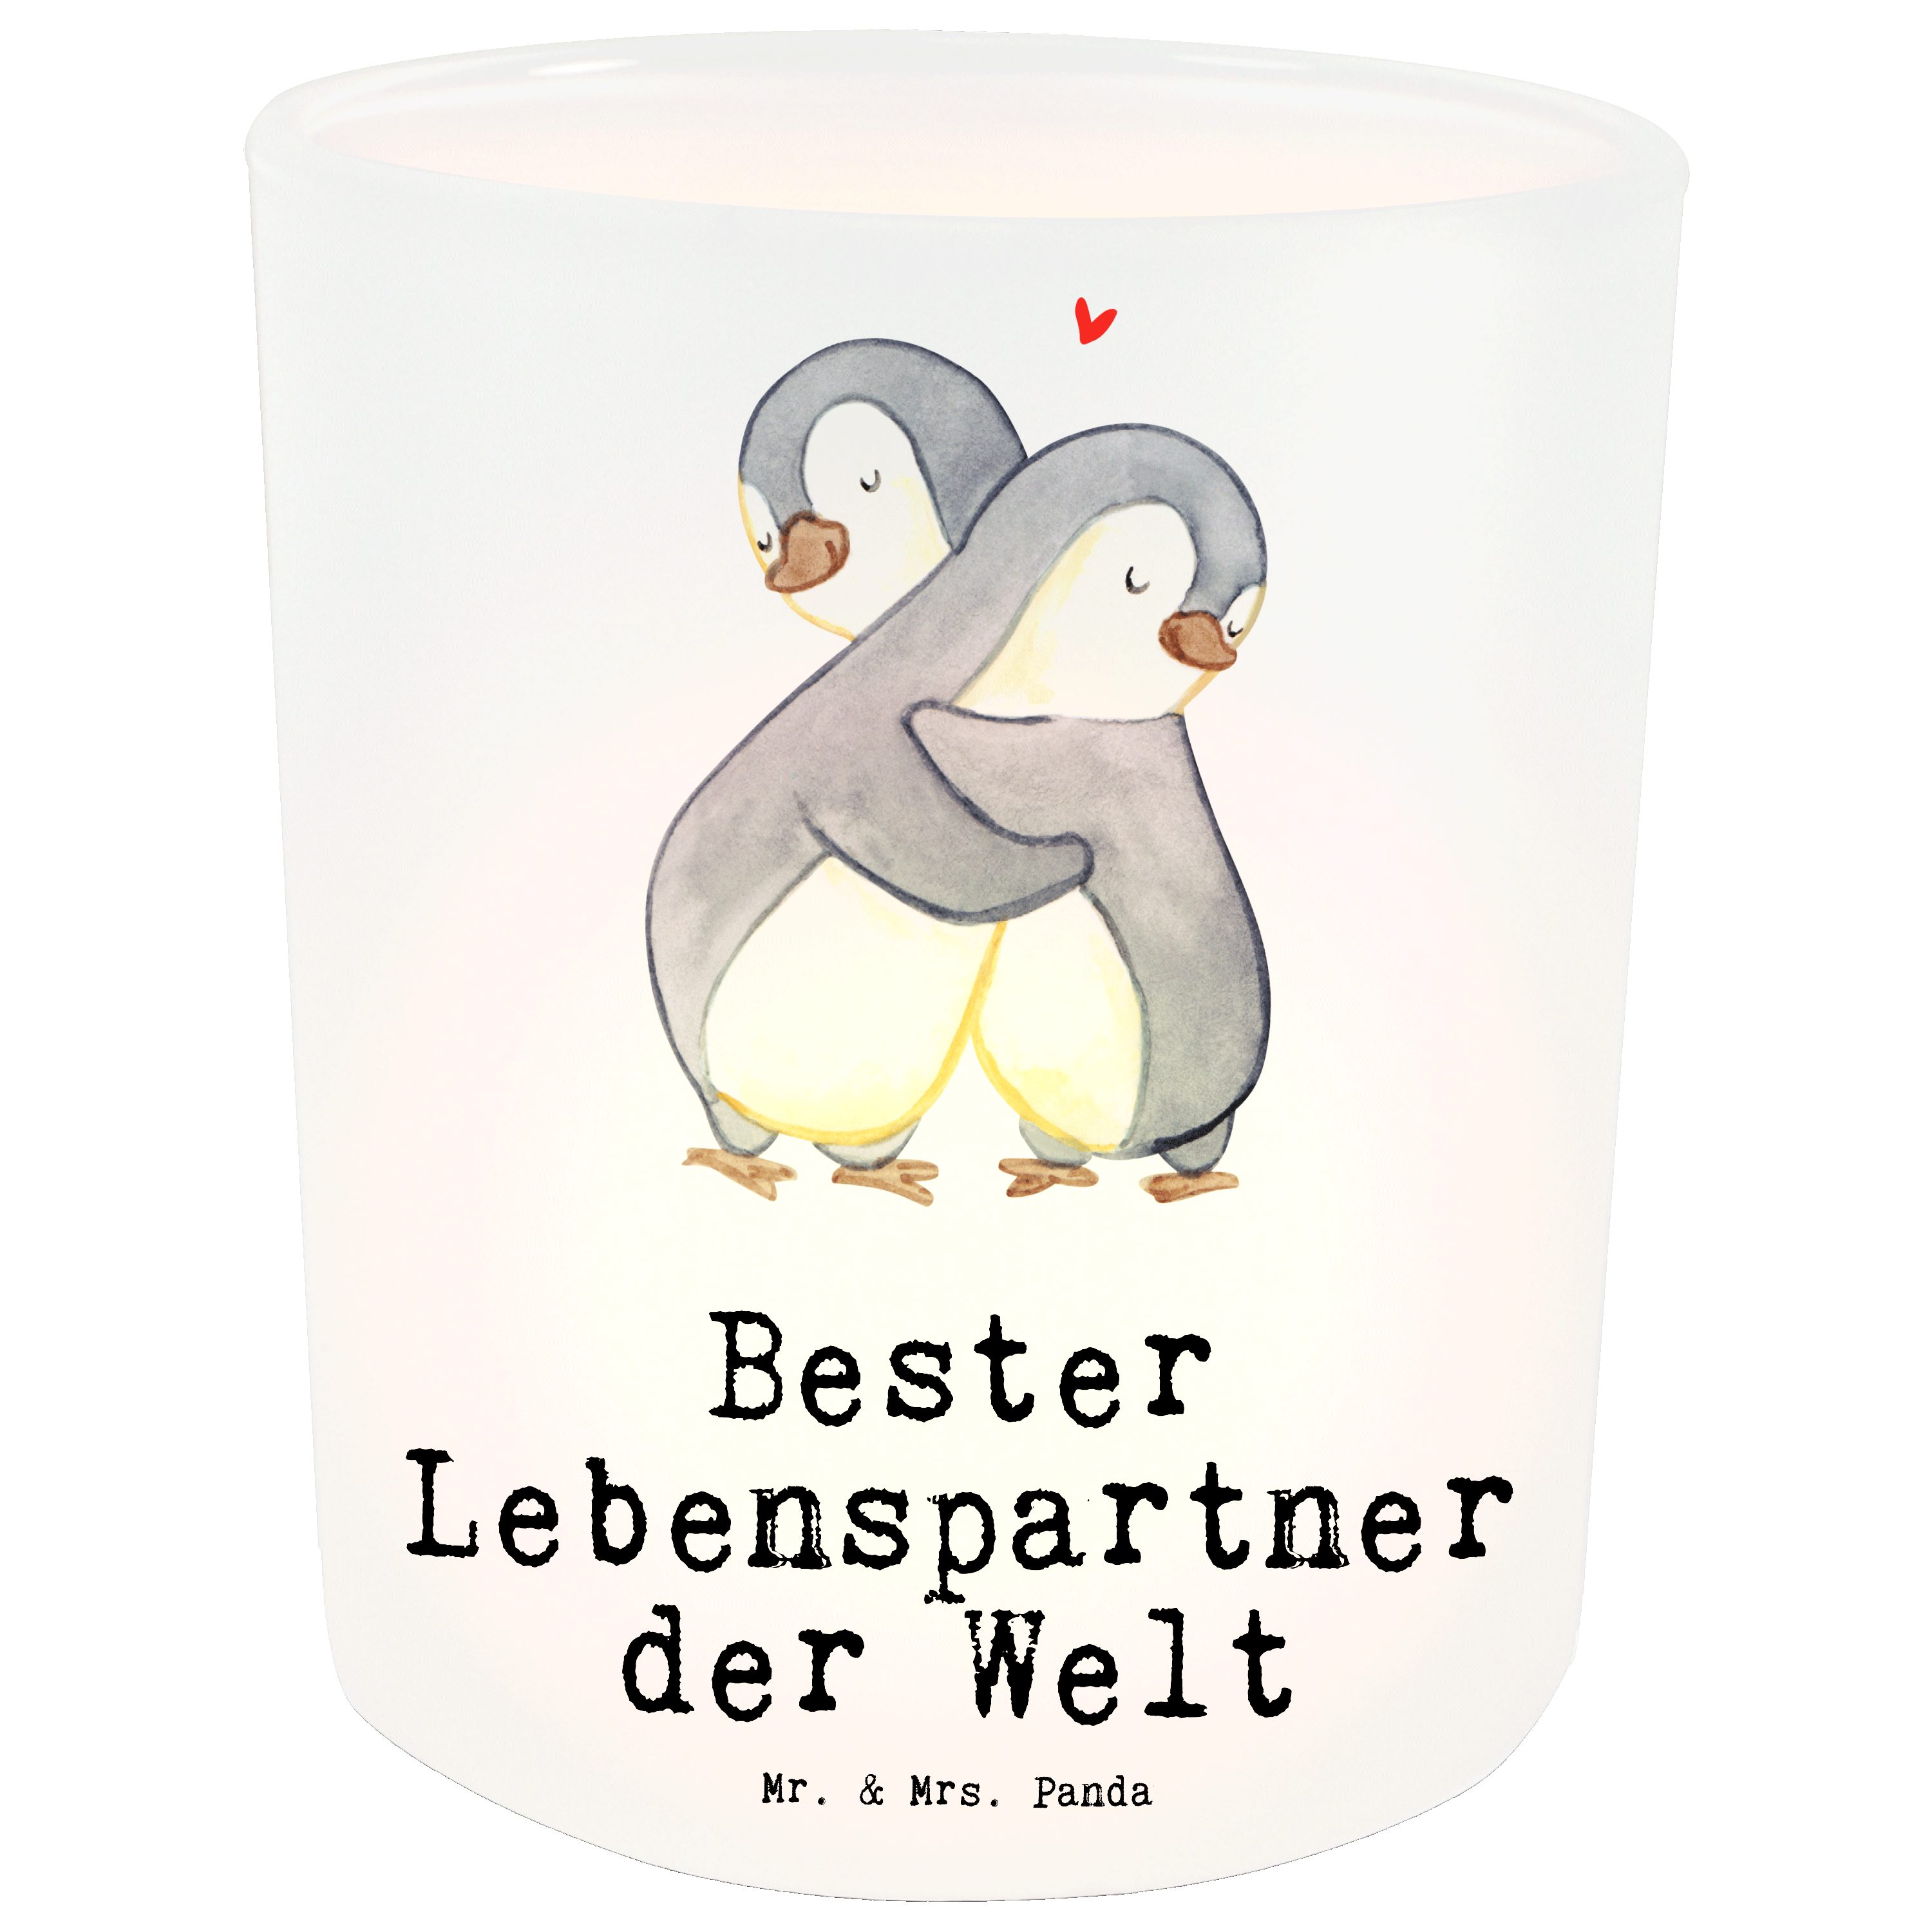 der - Lebenspartner Mrs. Transparent Pinguin & Teeli (1 Mr. Welt St) Windlicht Geschenk, Panda - Bester